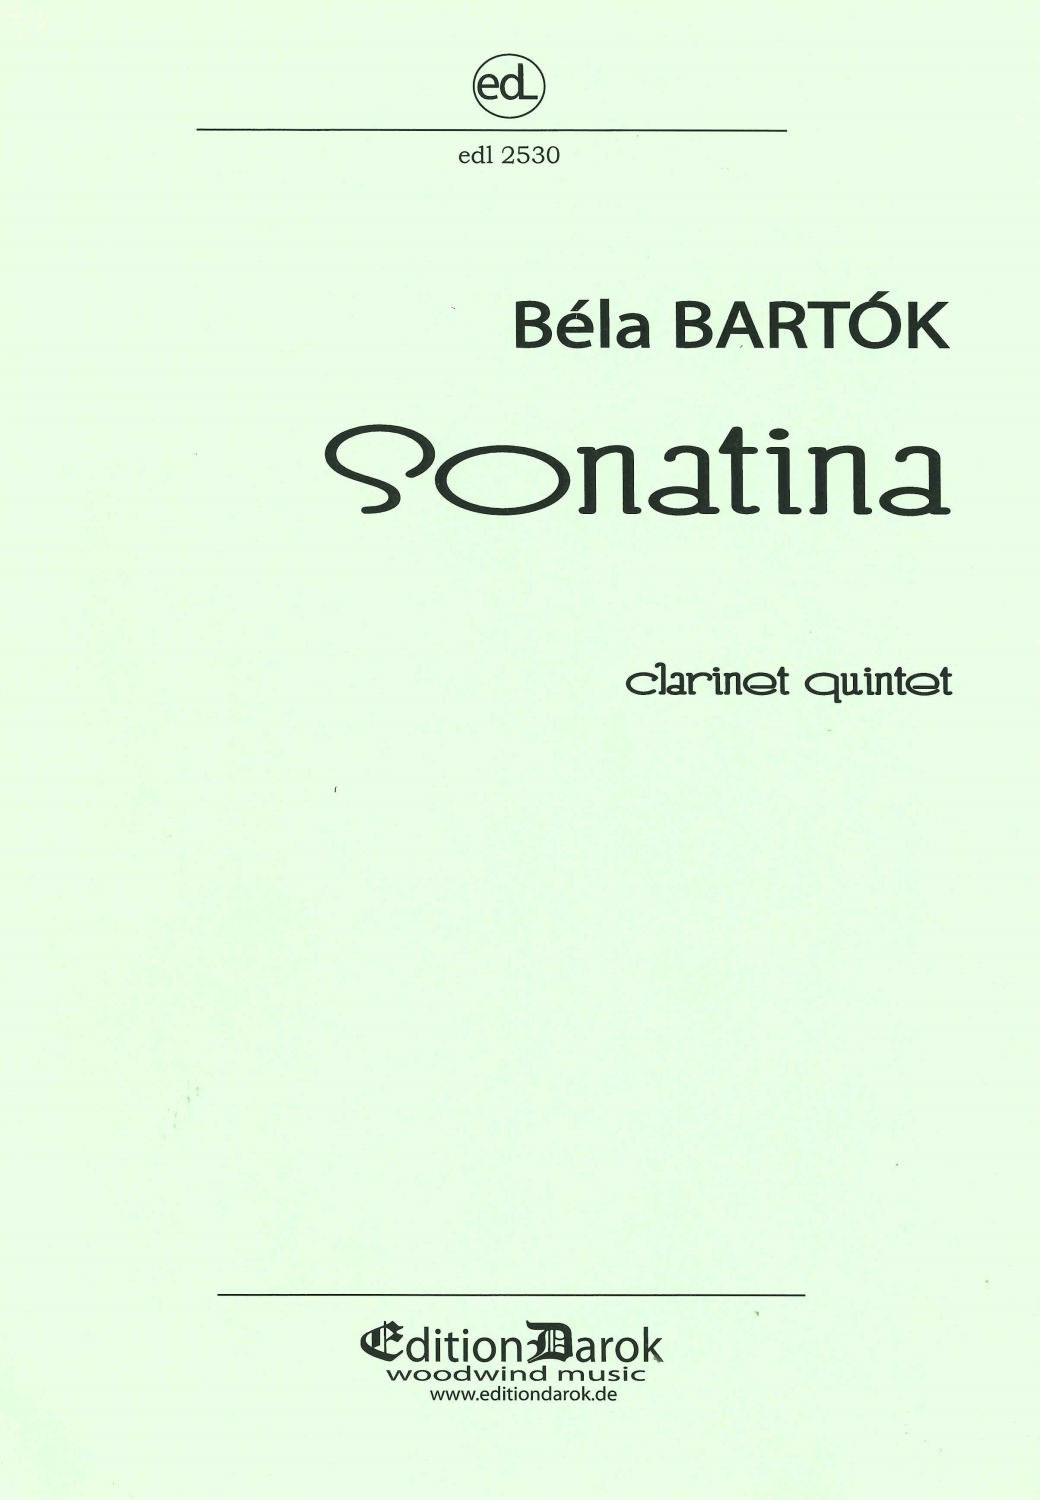 bela-bartok-sonatina-5clr-_pst_-_0001.JPG